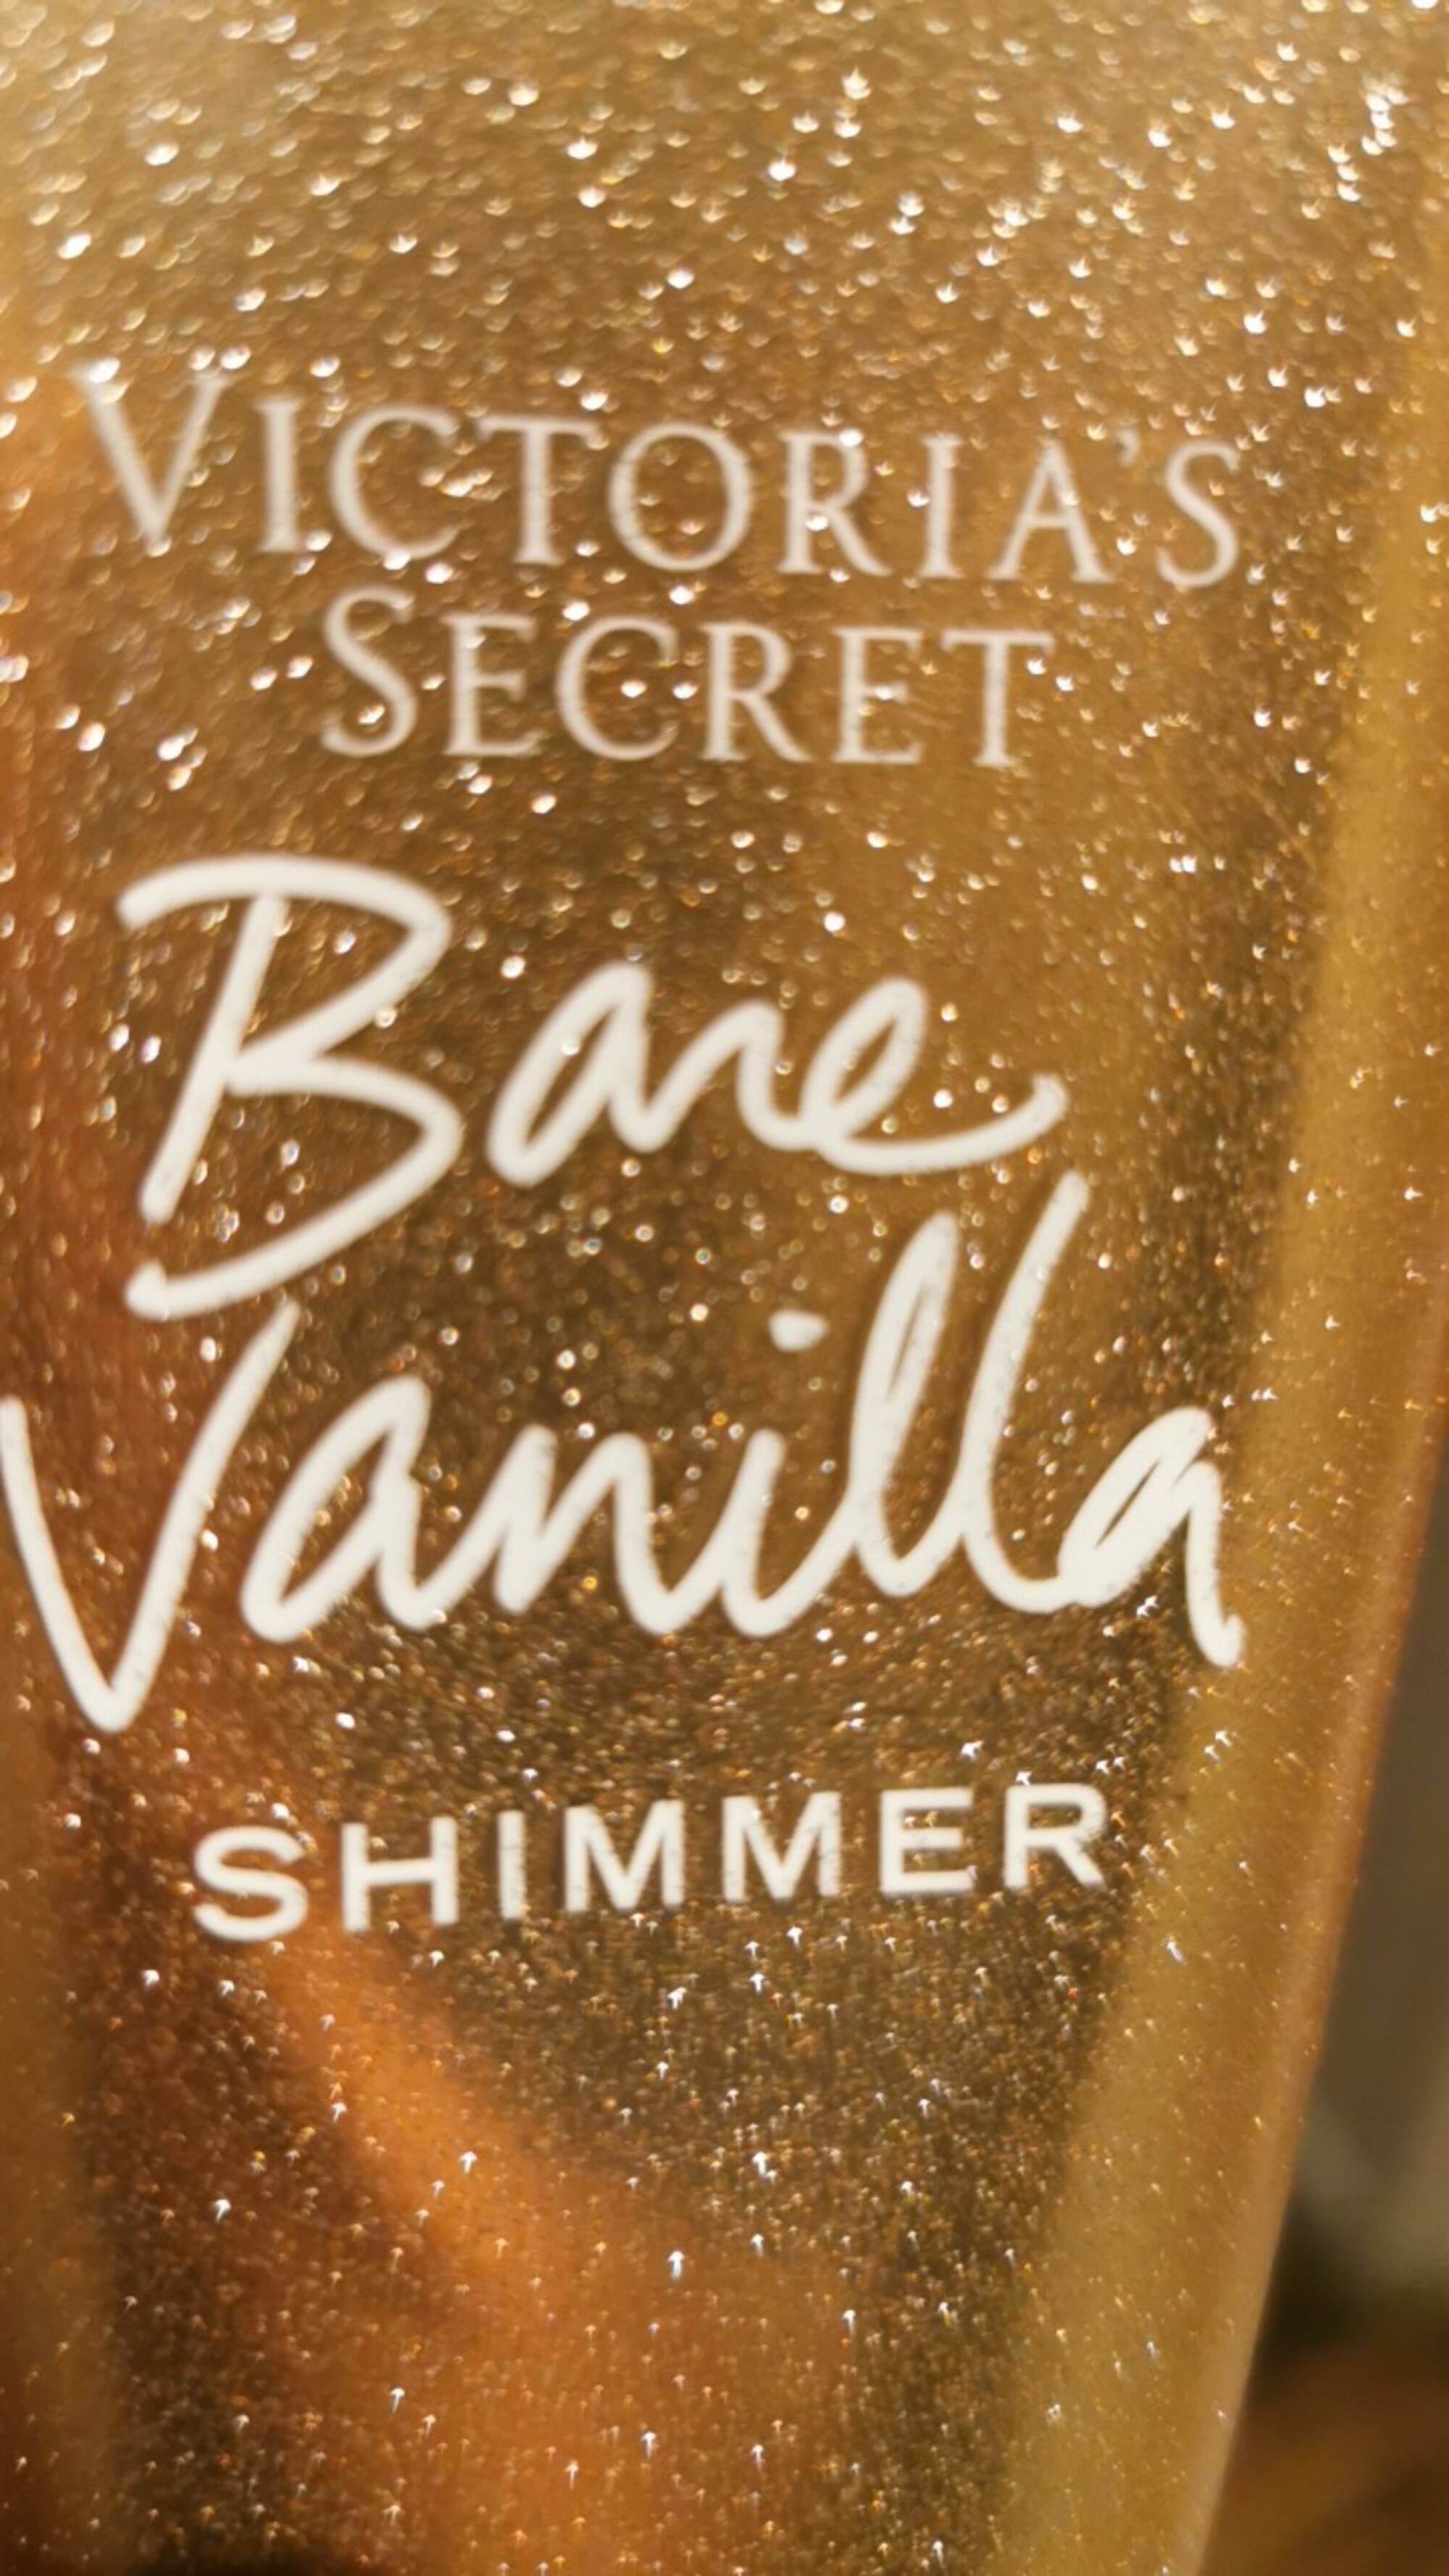 VICTORIA'S SECRET - Bare vanilla shimmer